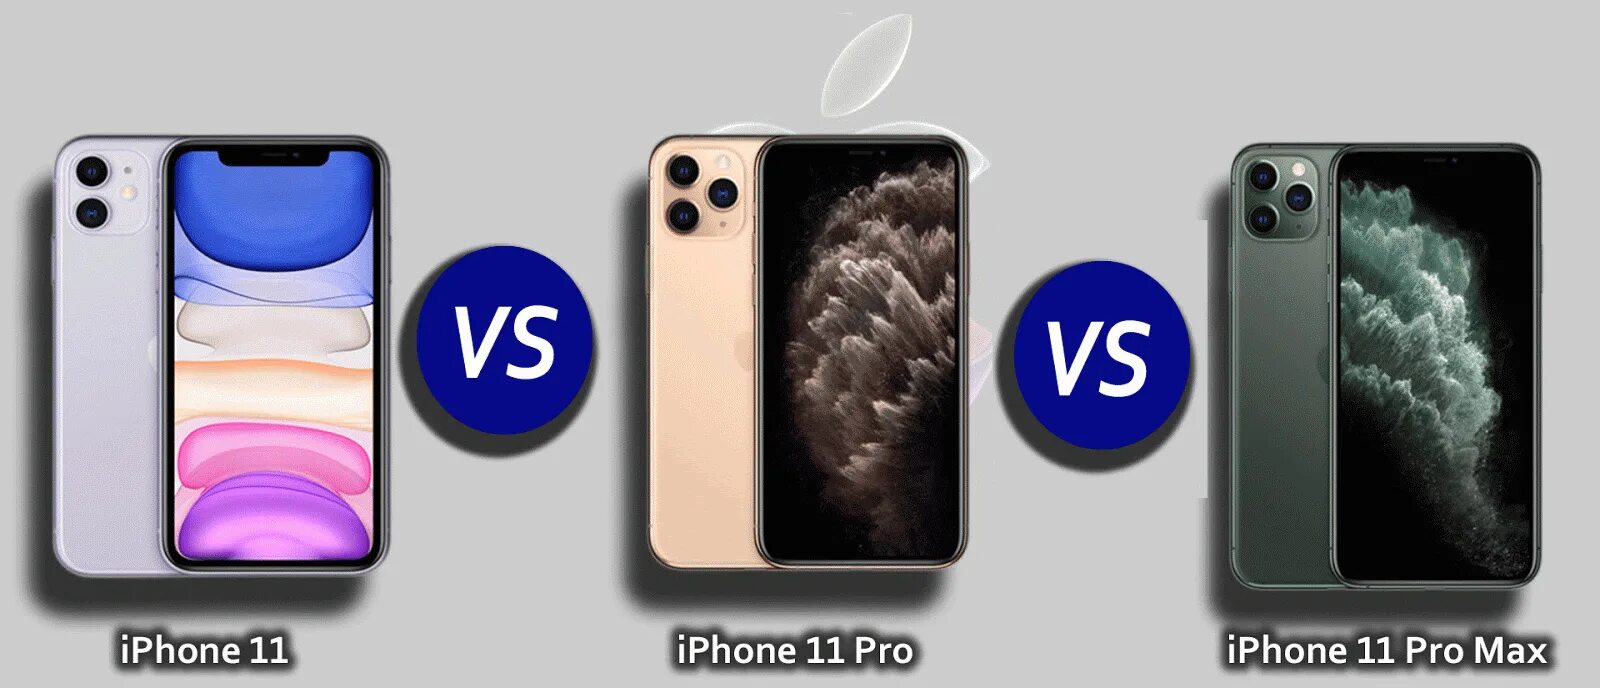 Iphone 11 Pro vs Promax. Iphone 11 vs 11 Pro. Iphone 11 Pro Max габариты. Iphone 11 Pro vs iphone 11 Pro Max. Айфон 11 против 11 про